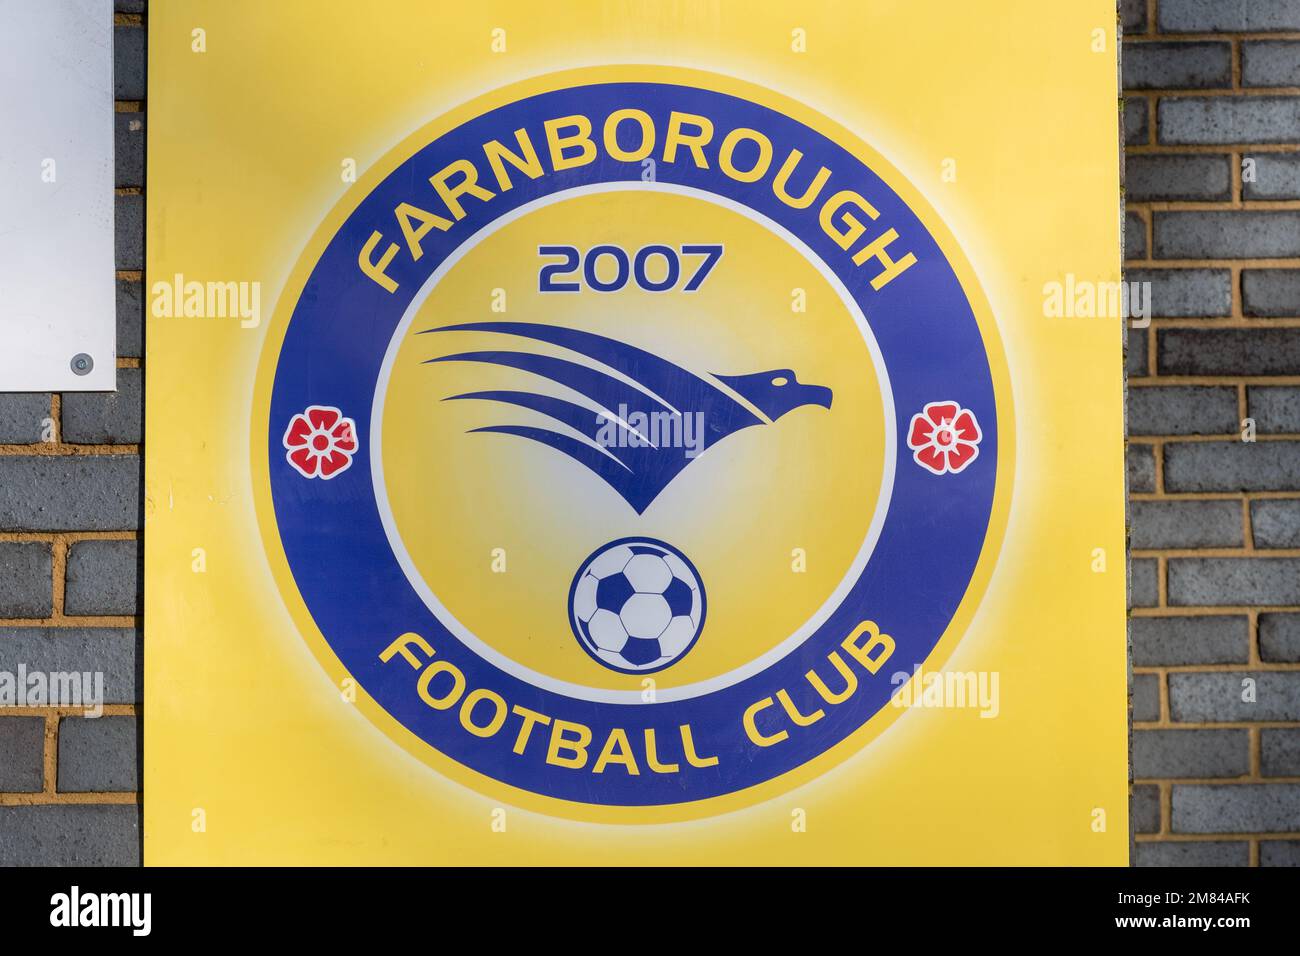 Farnborough Football Club logo, Cherrywood Road, Farnborough, Hampshire, England, UK Stock Photo